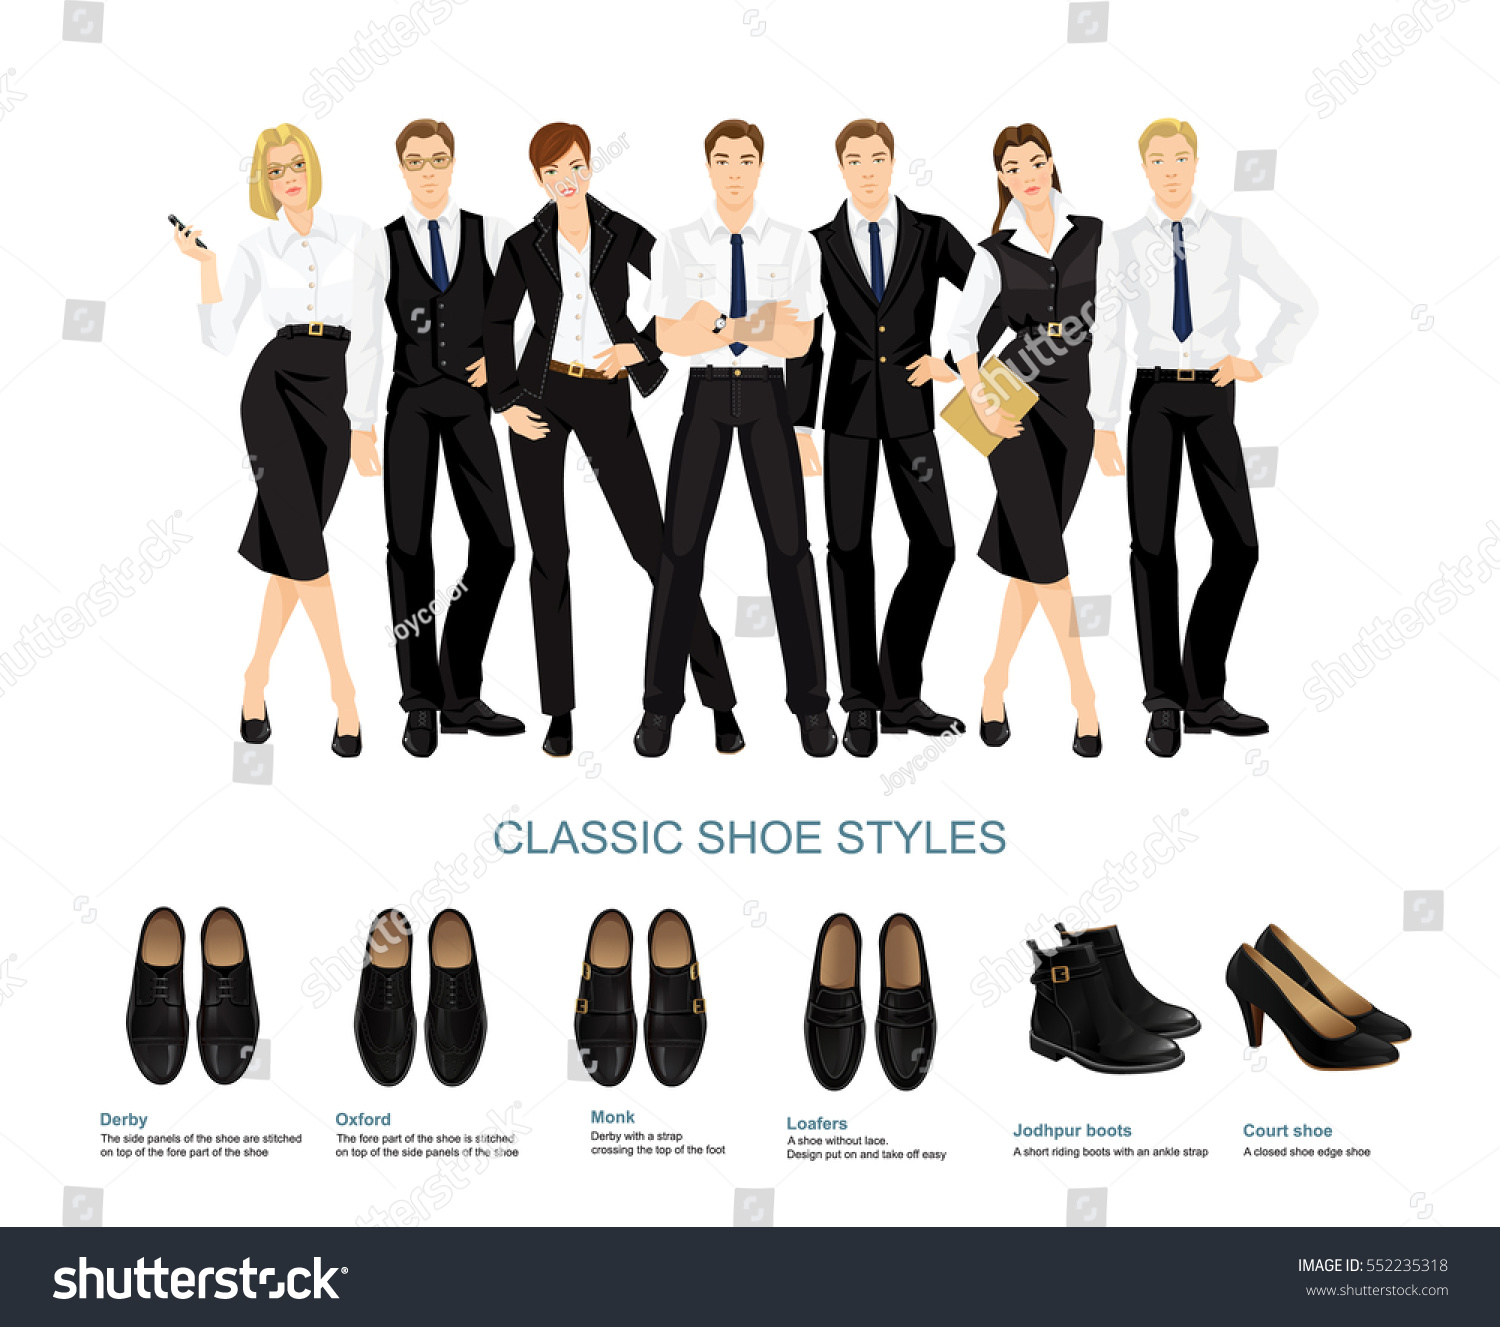 classic shoe styles